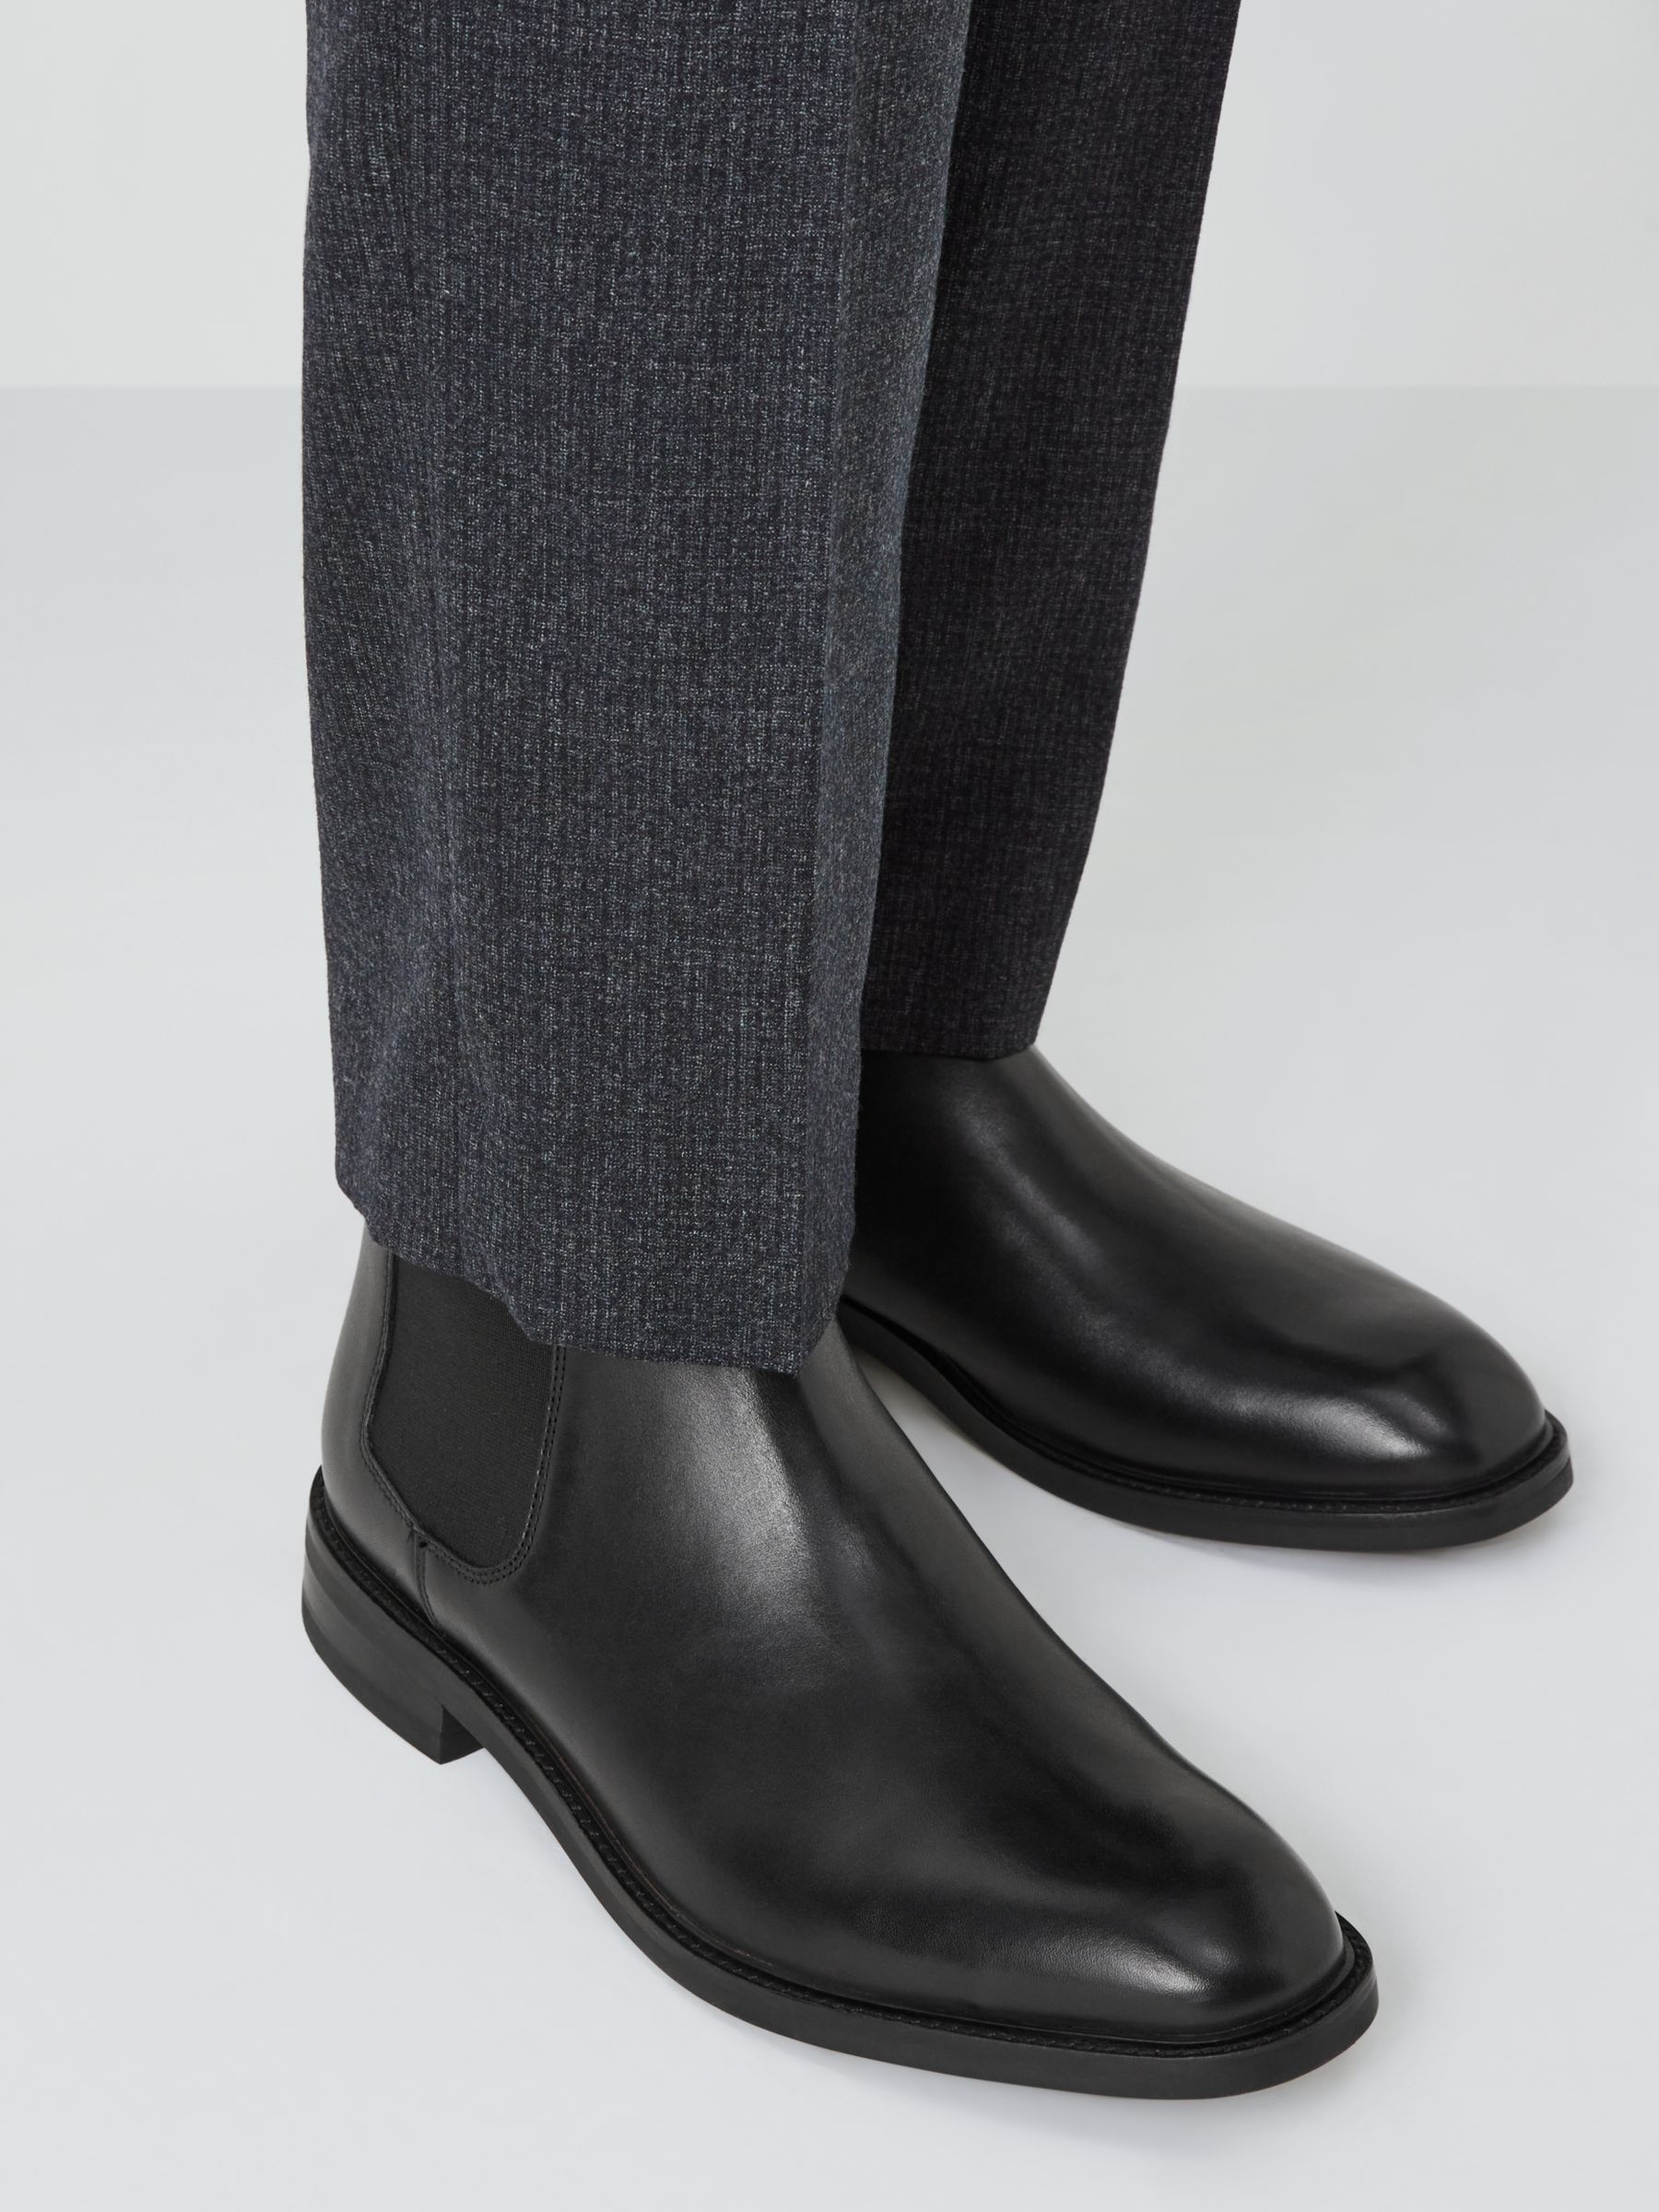 John Lewis Formal Leather Chelsea Boots, Black at John Lewis & Partners